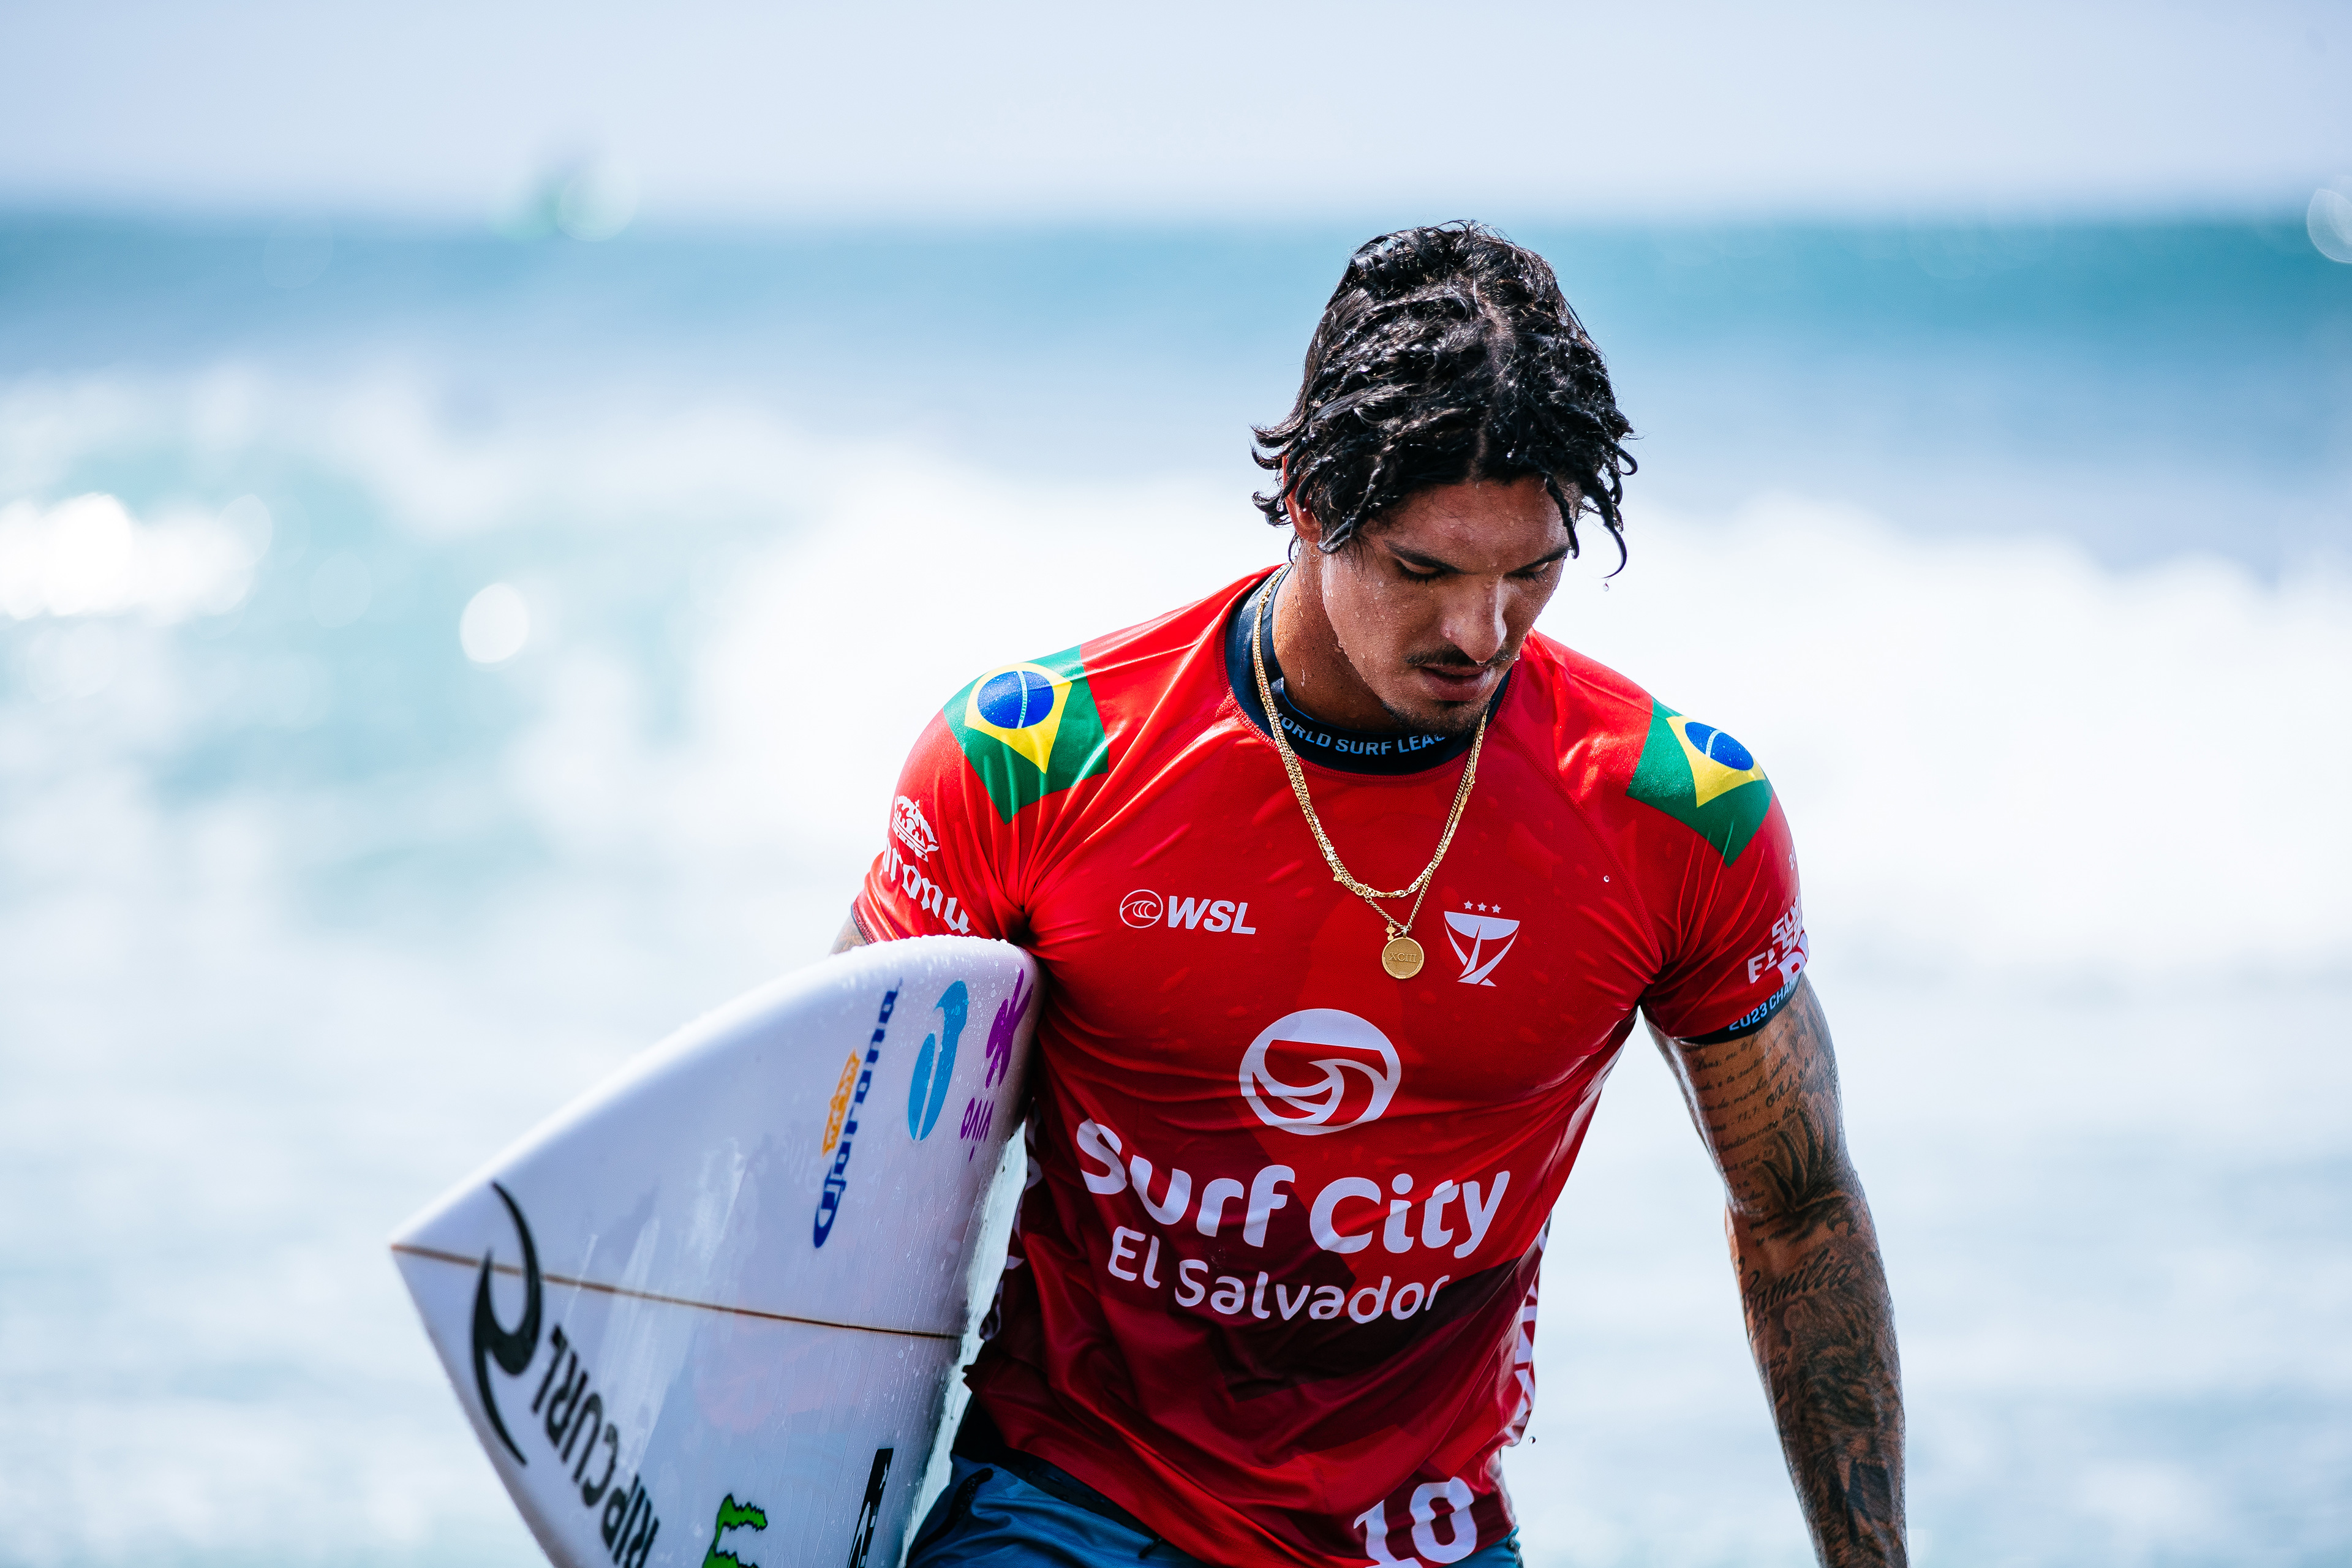 Gabriel Medina finaliza o Surf City El Salvador Pro 2023 em nono lugar.